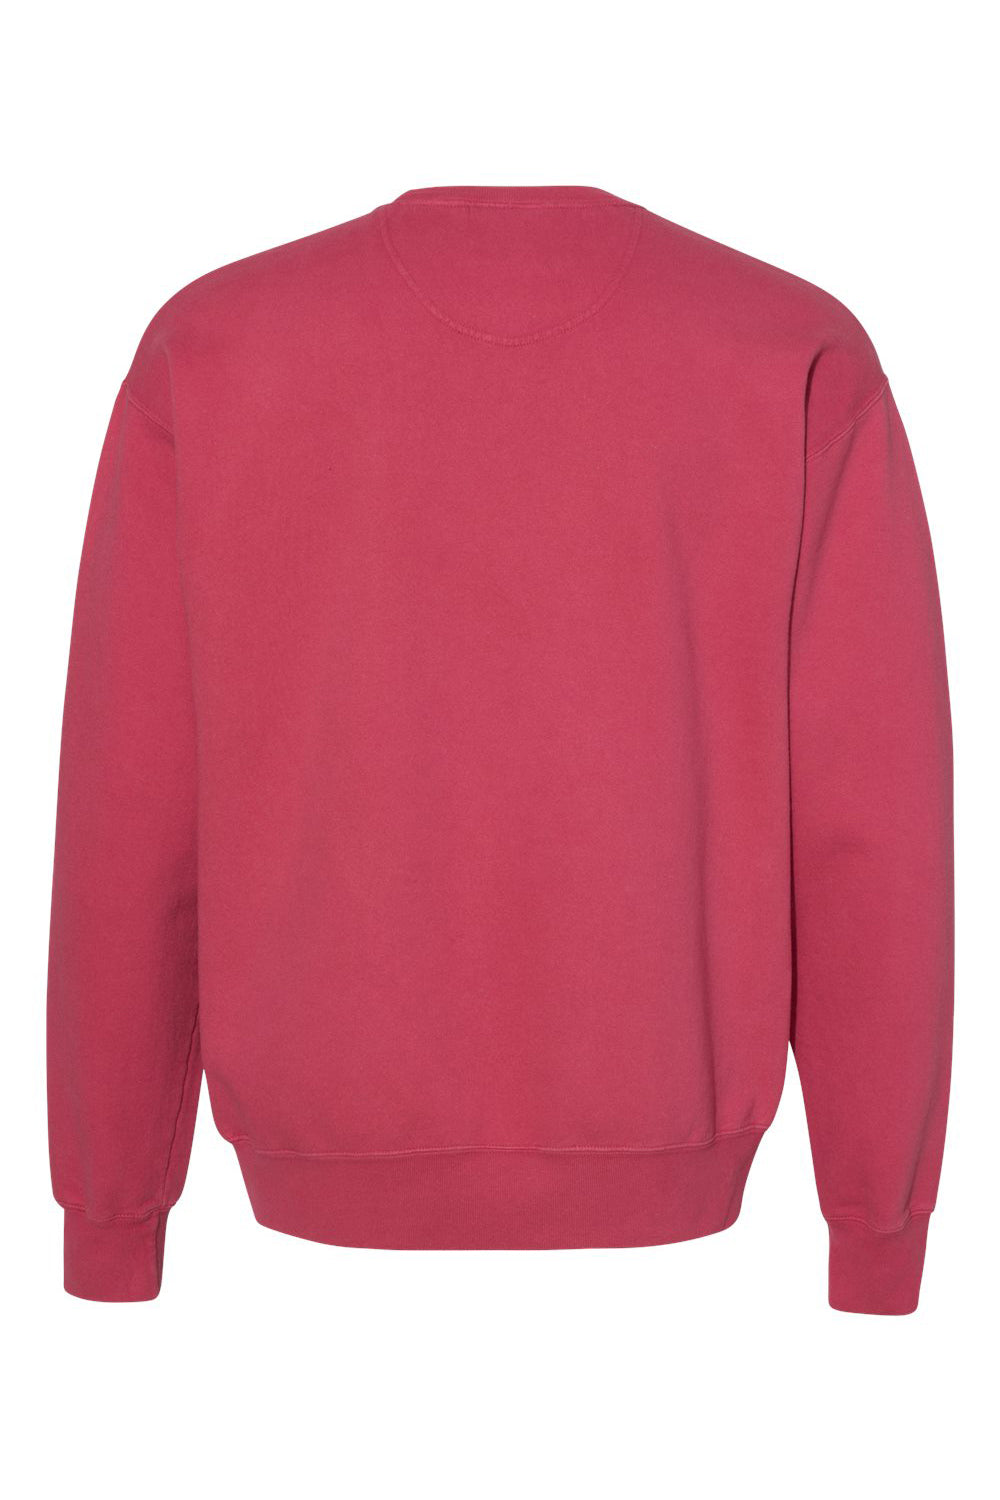 Champion CD400 Mens Garment Dyed Crewneck Sweatshirt Crimson Red Flat Back